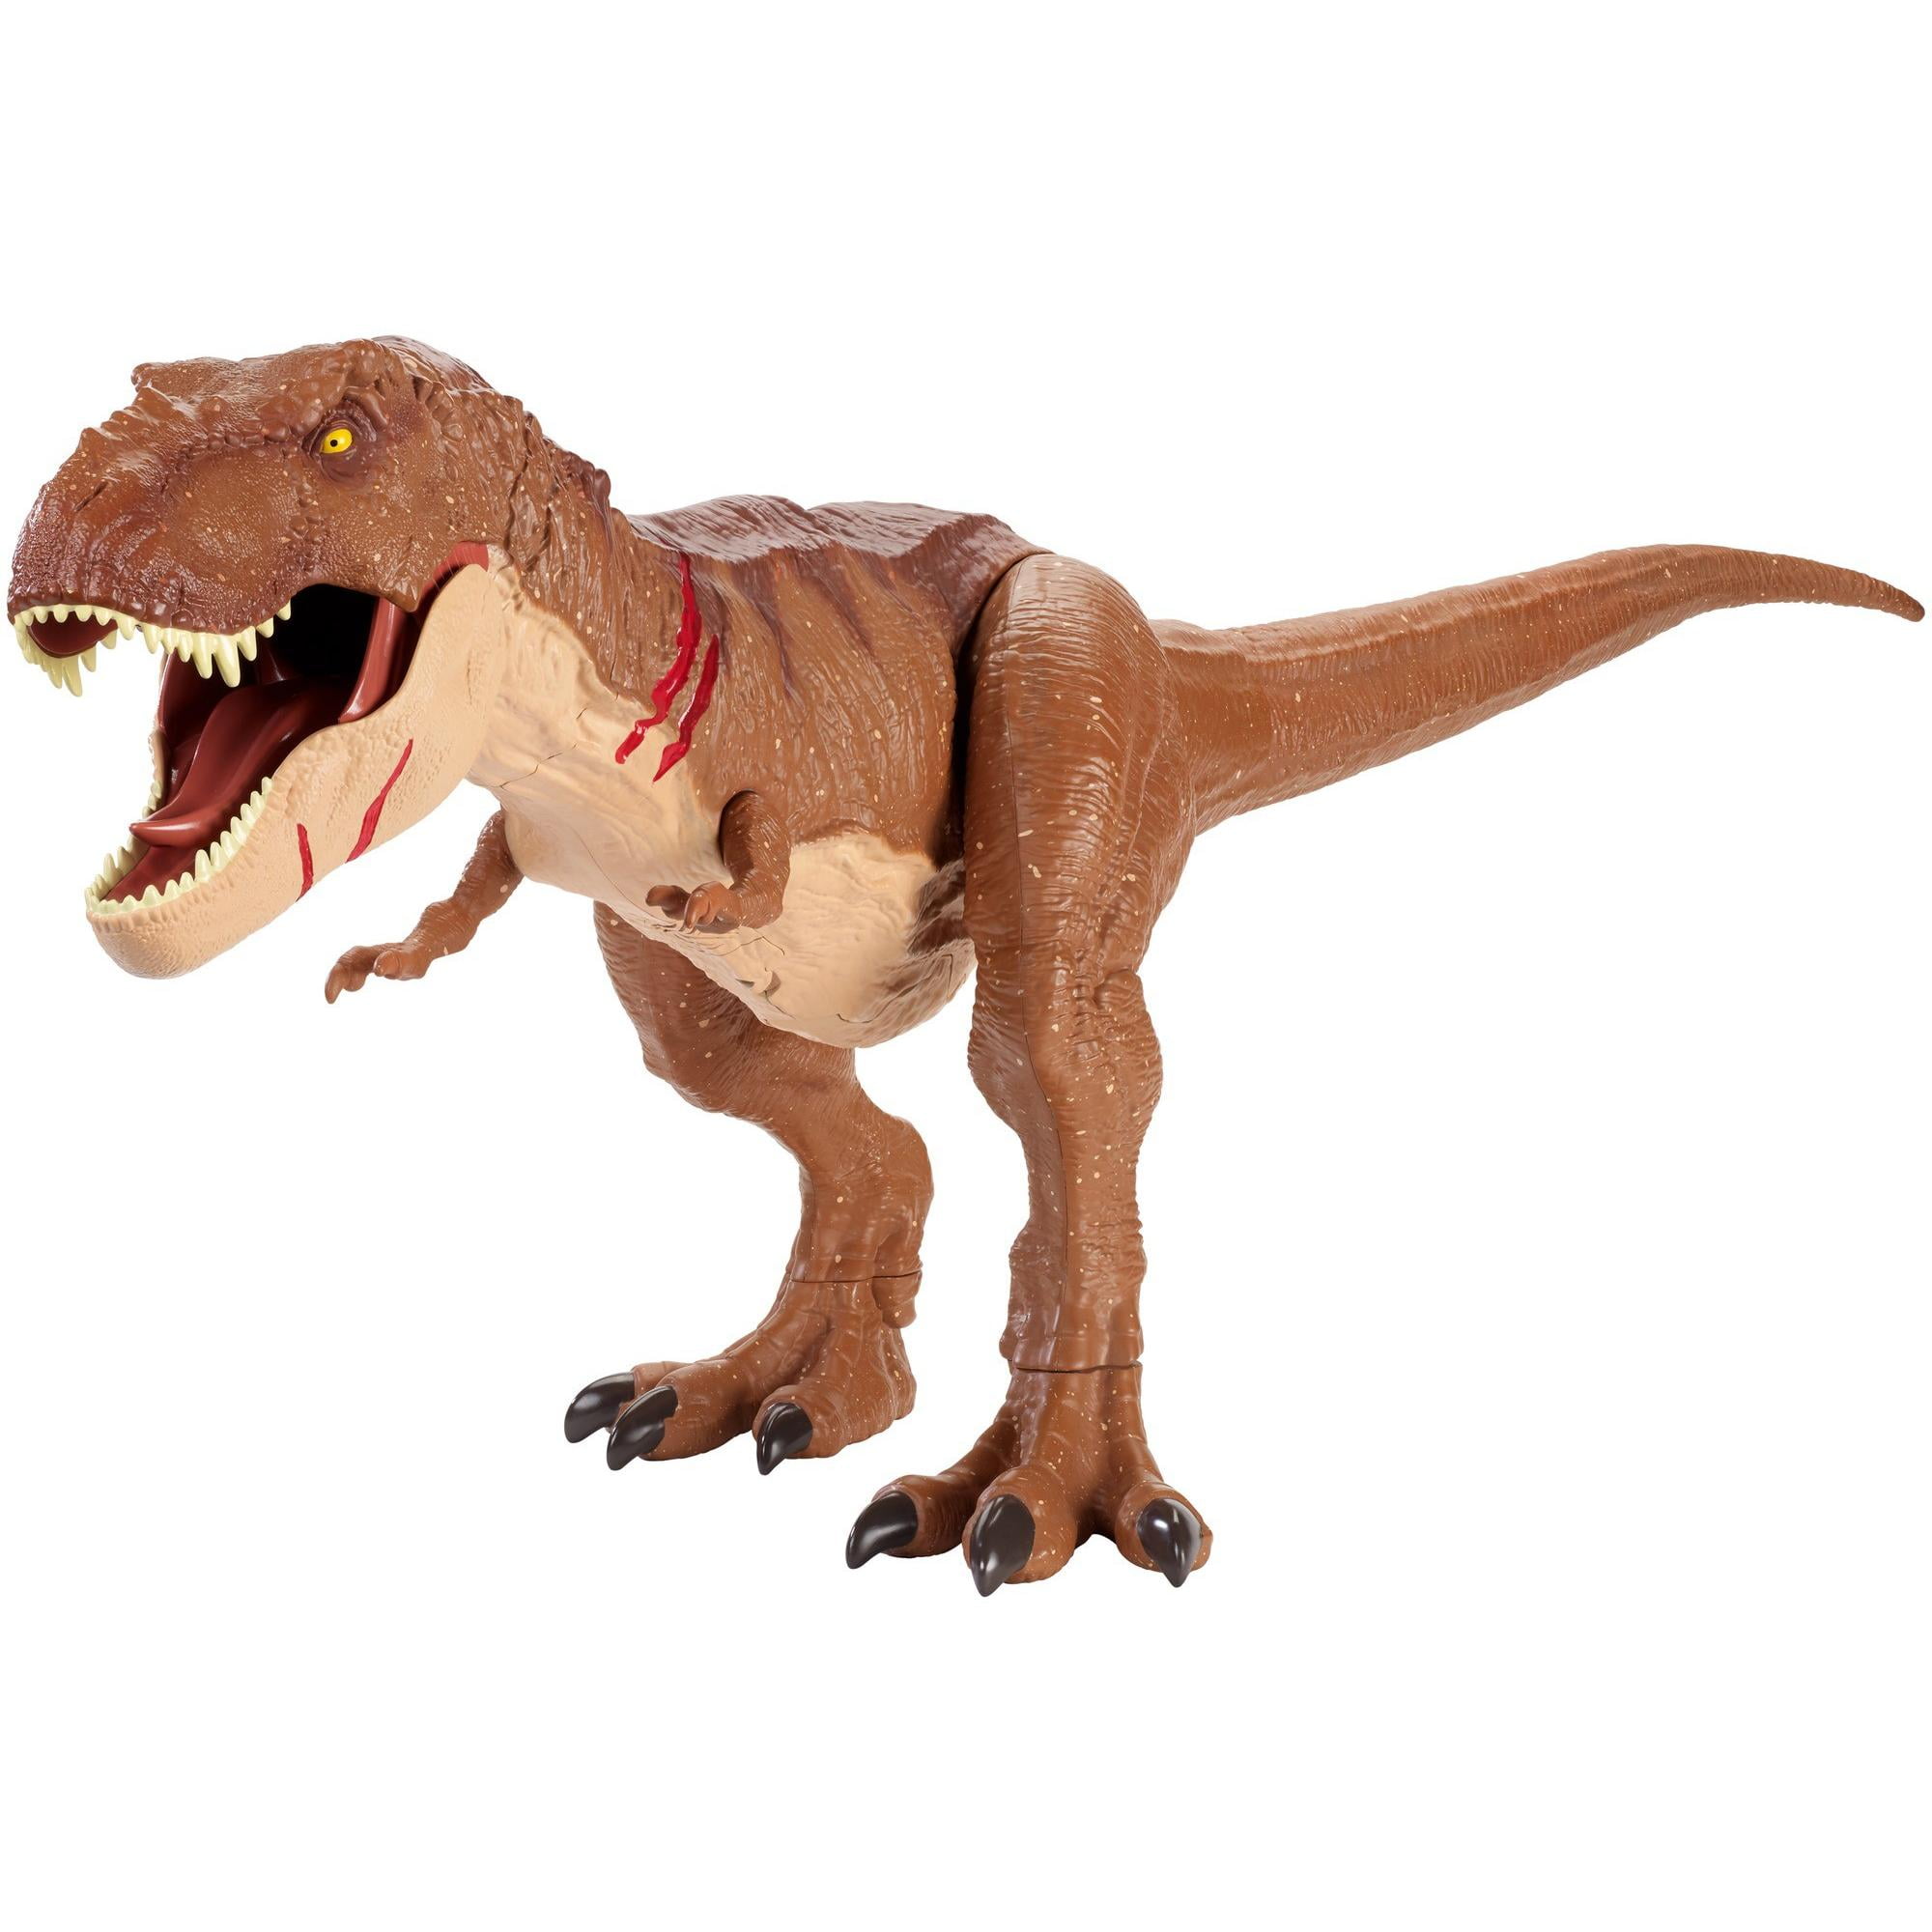 Jurassic World Battle Damage Roarin' Super Colossal Tyrannosaurus Rex Dinosaur 